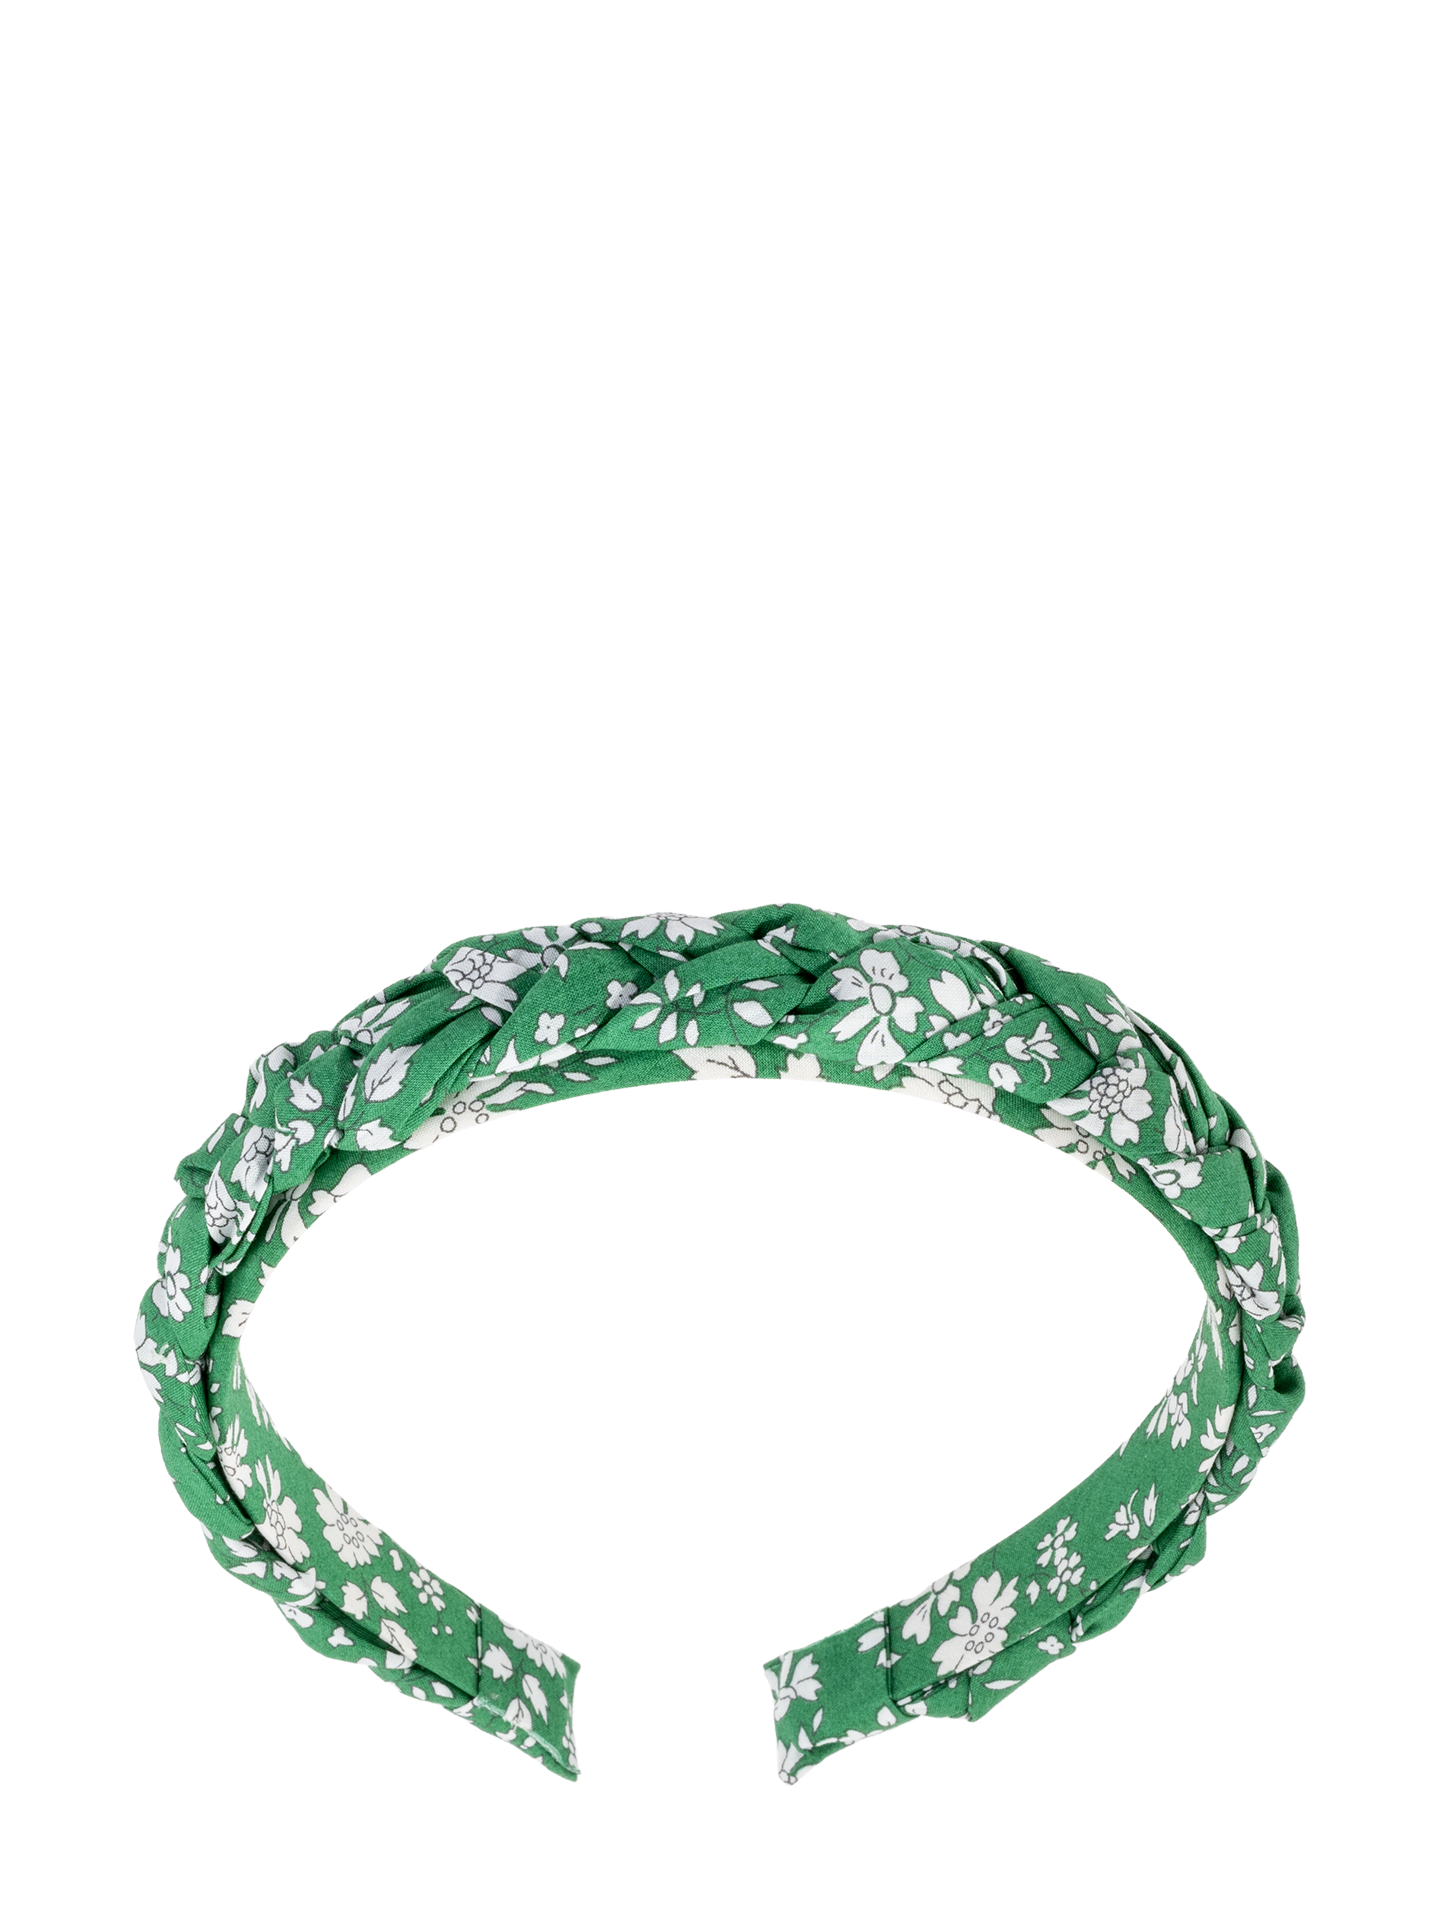 Braided Hairband, Green Liberty print